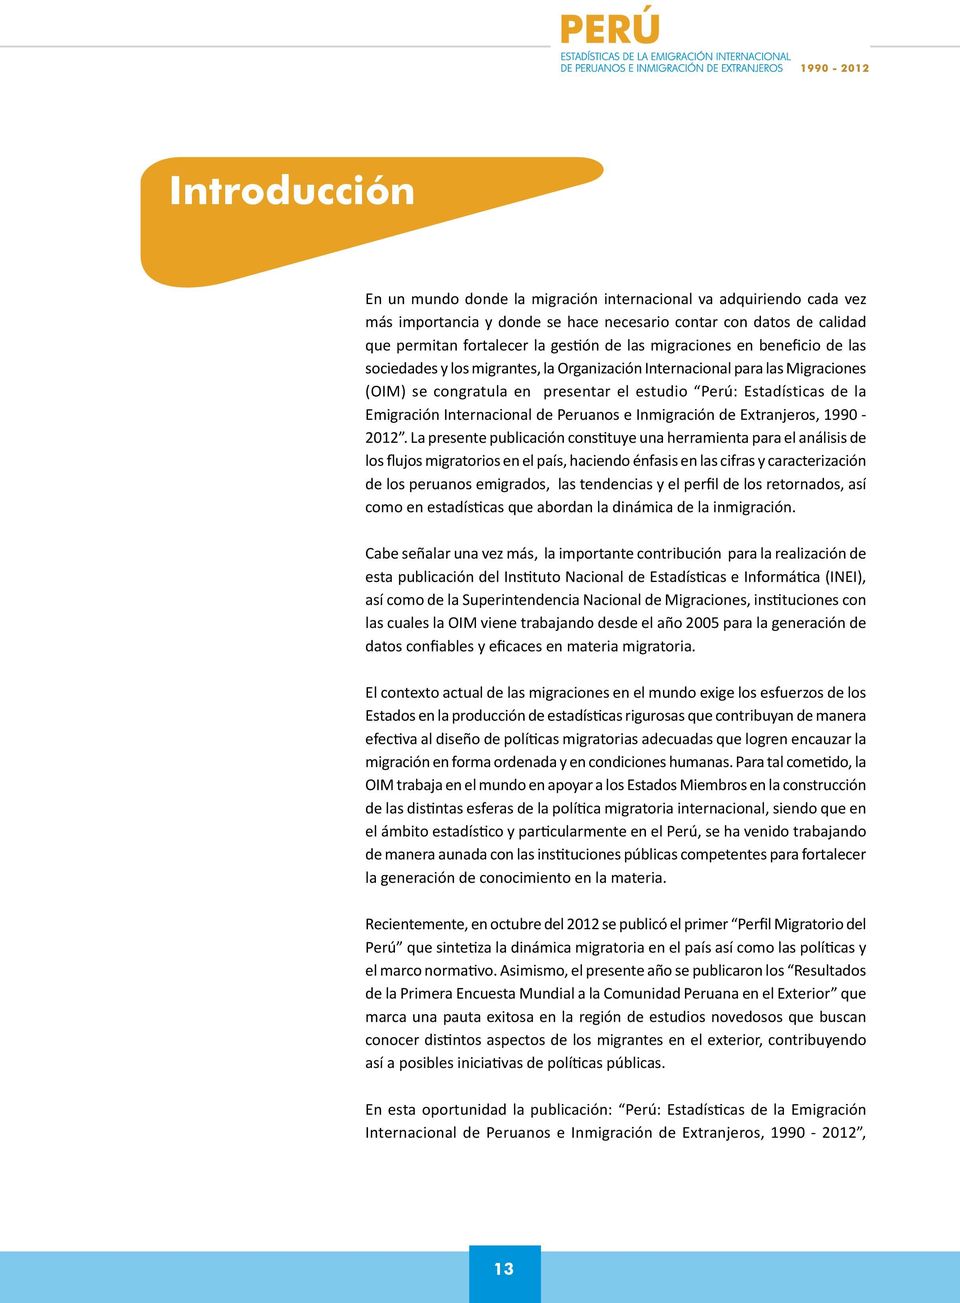 Internacional de Peruanos e Inmigración de Extranjeros, 1990-2012.